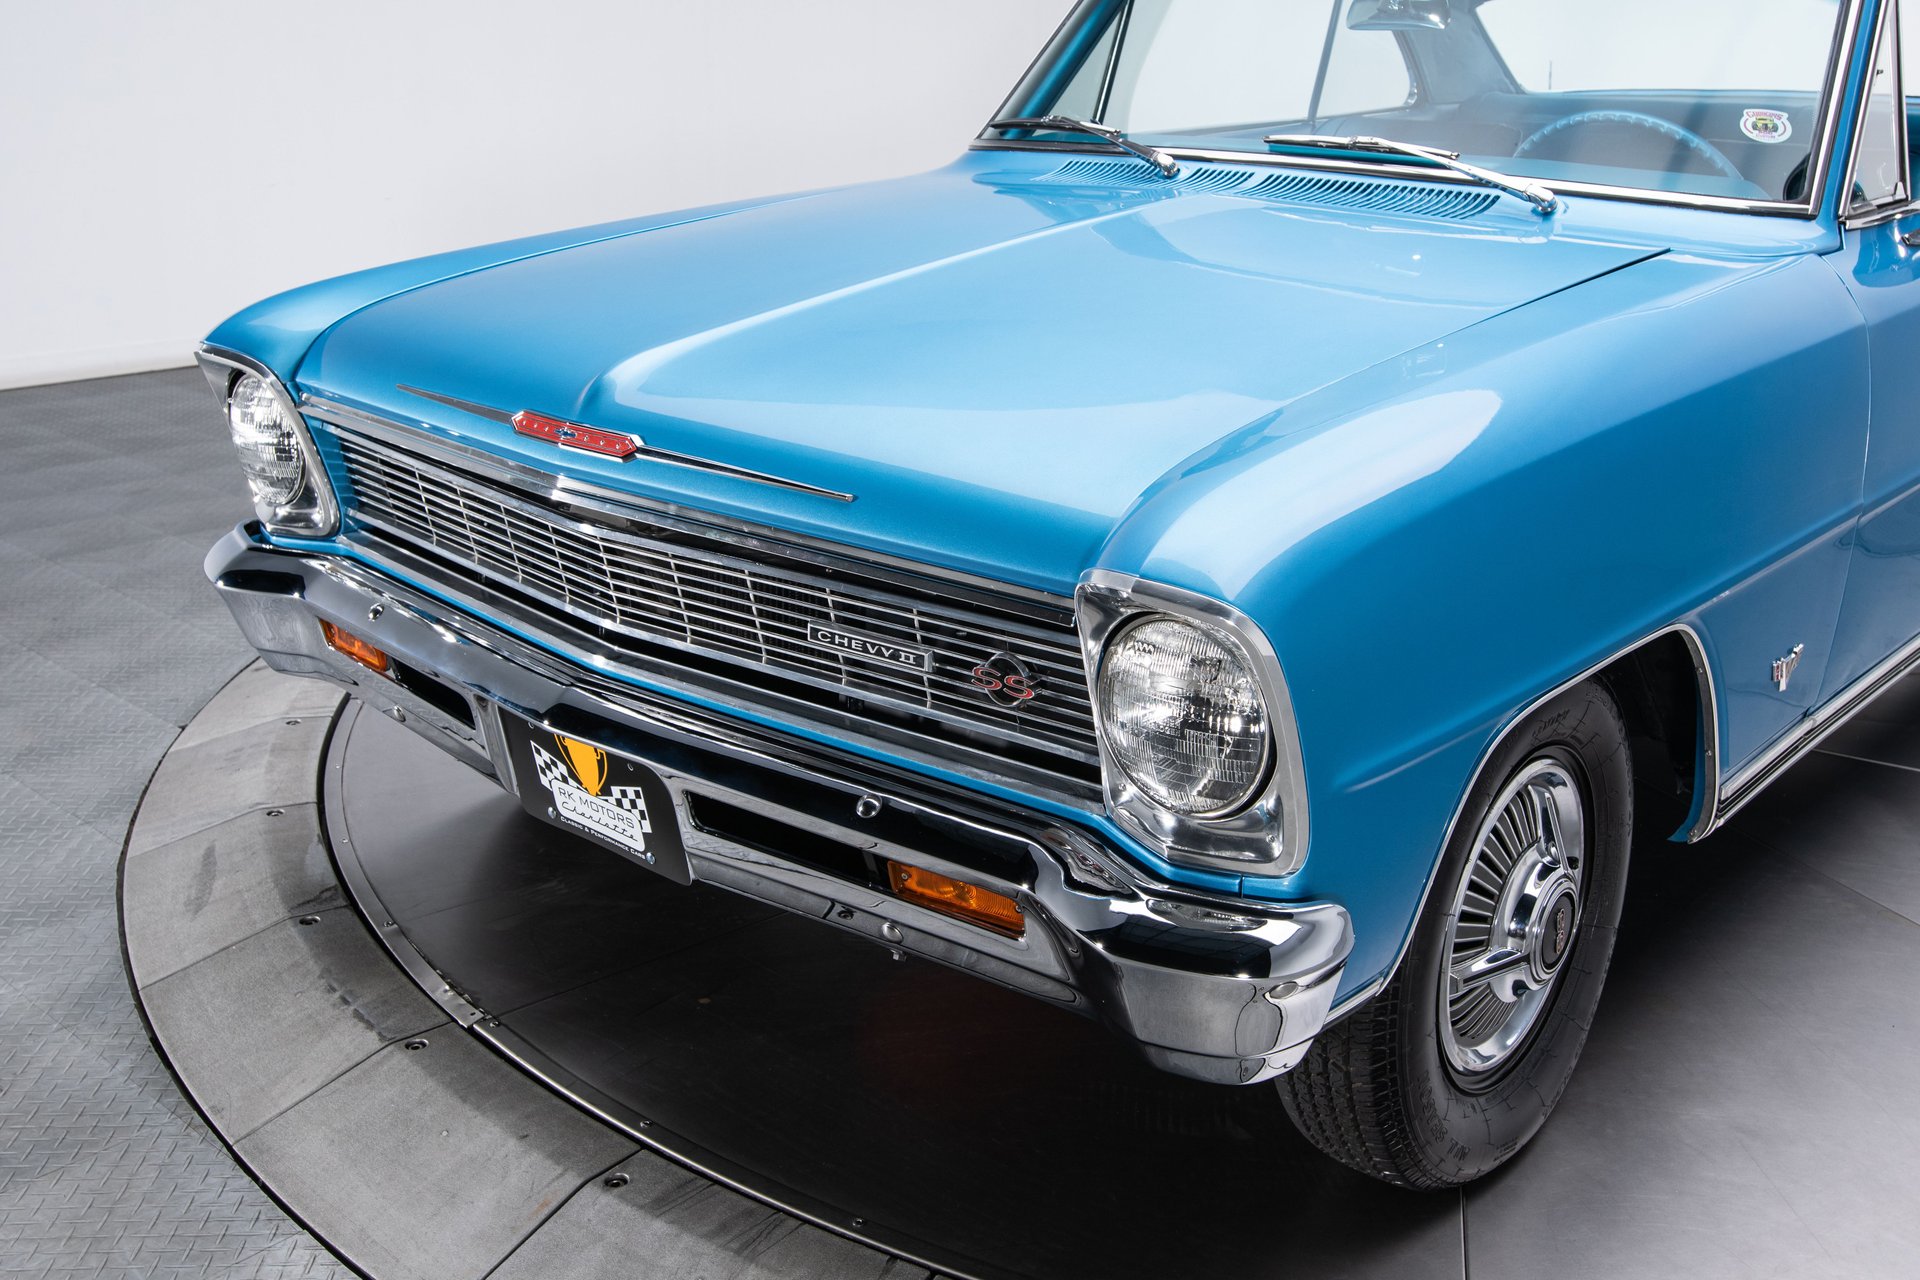 For Sale 1966 Chevrolet Nova